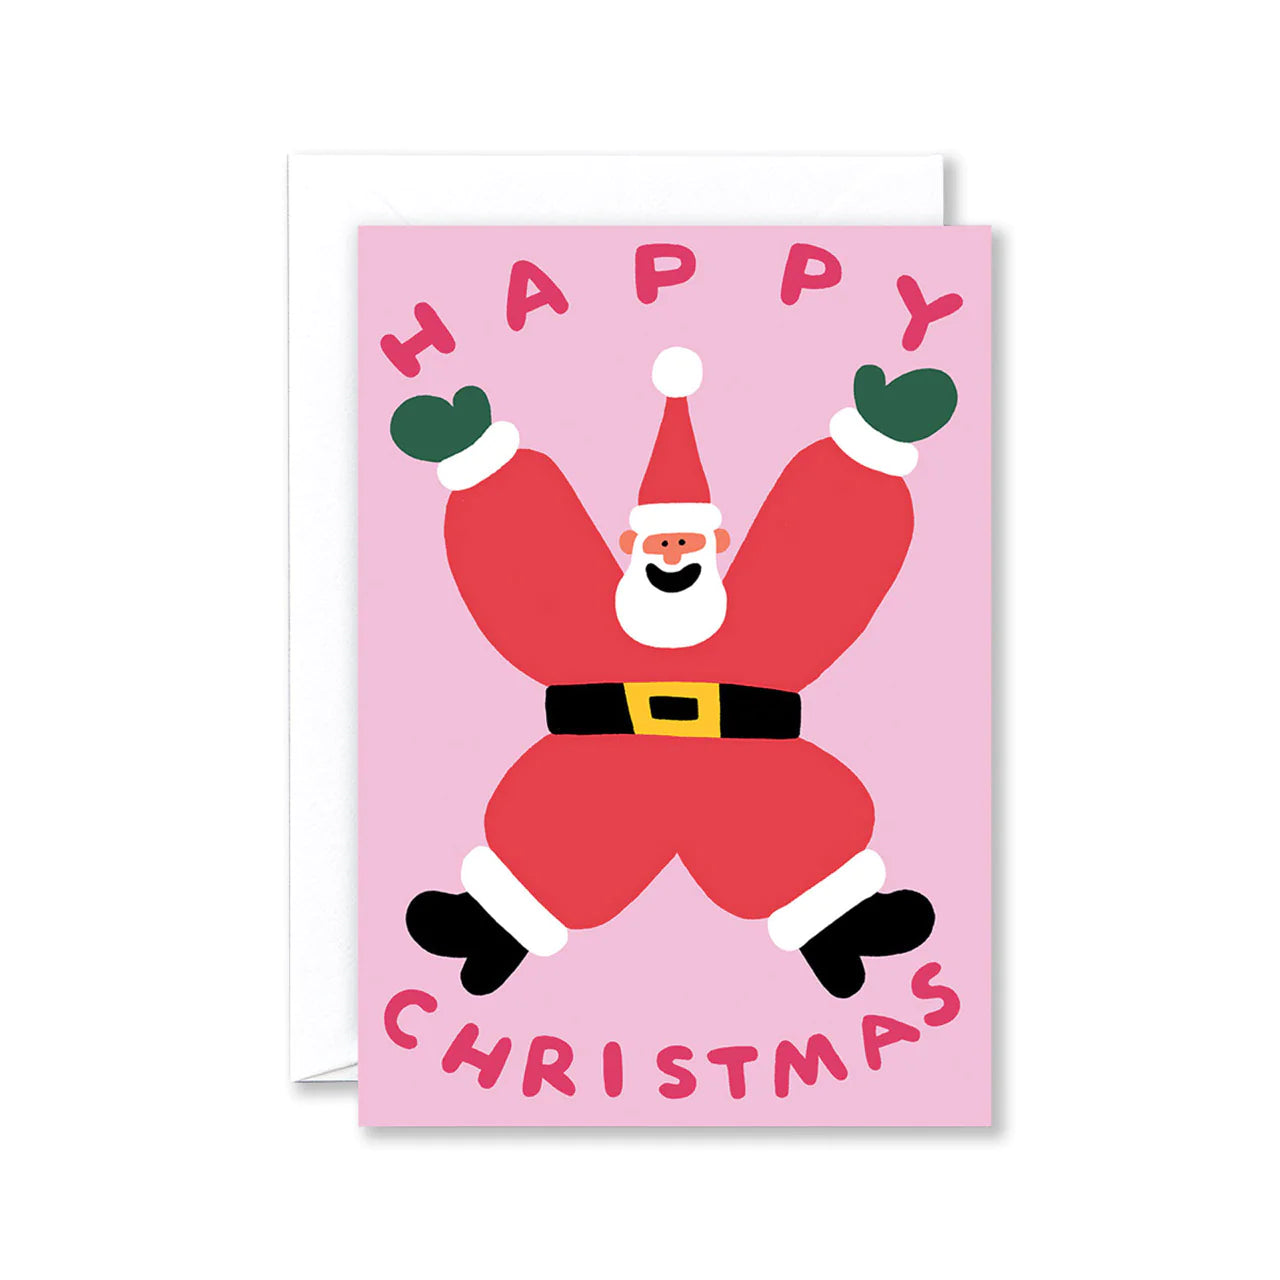 Wrap's Christmas Santa Greeting Card